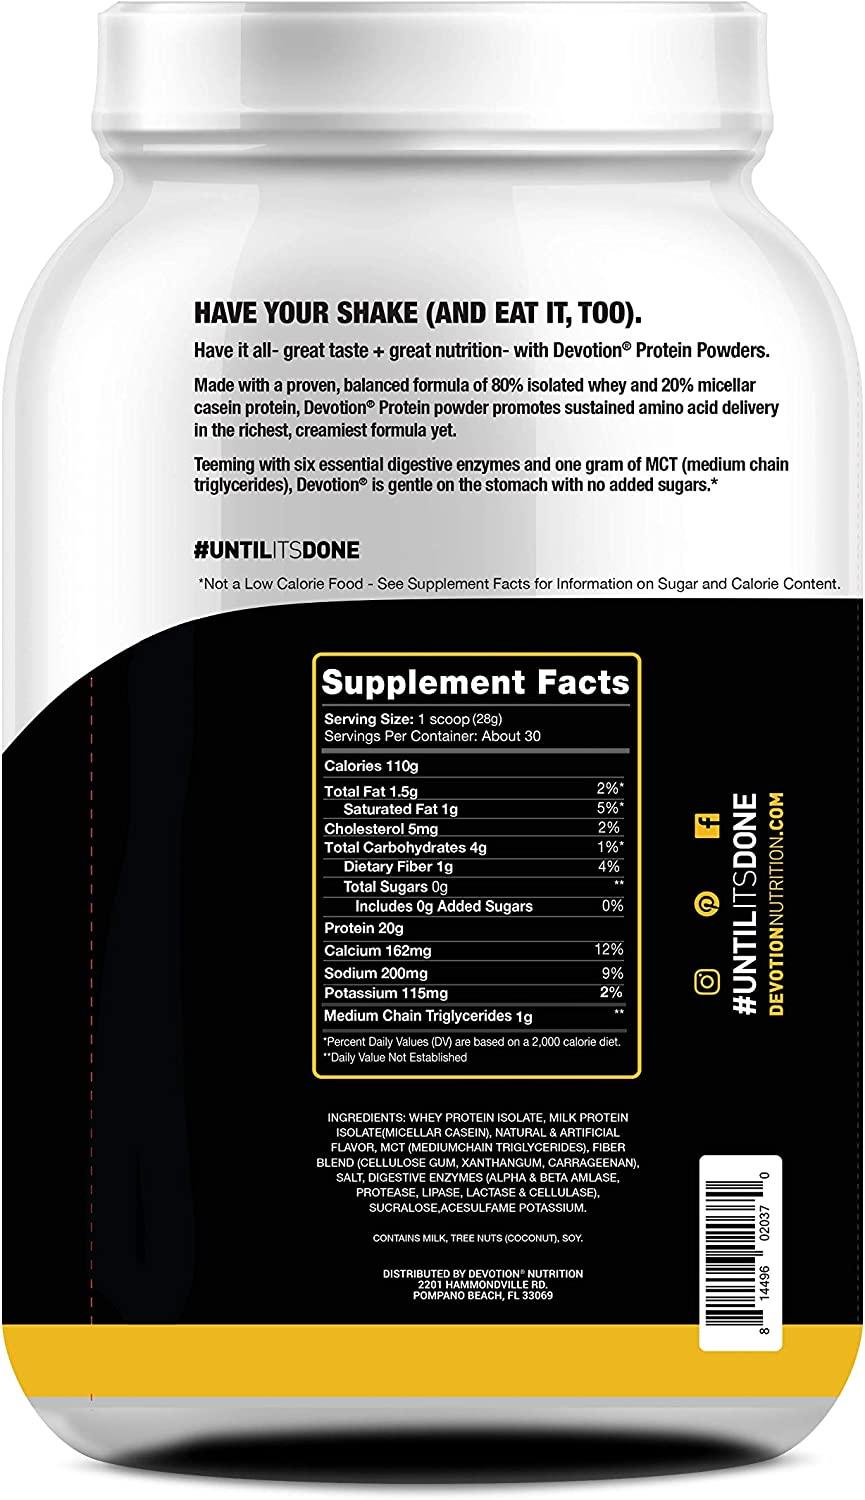 Devotion IceShaker OG XL for Protein, Wellness & Lattes – Devotion Nutrition